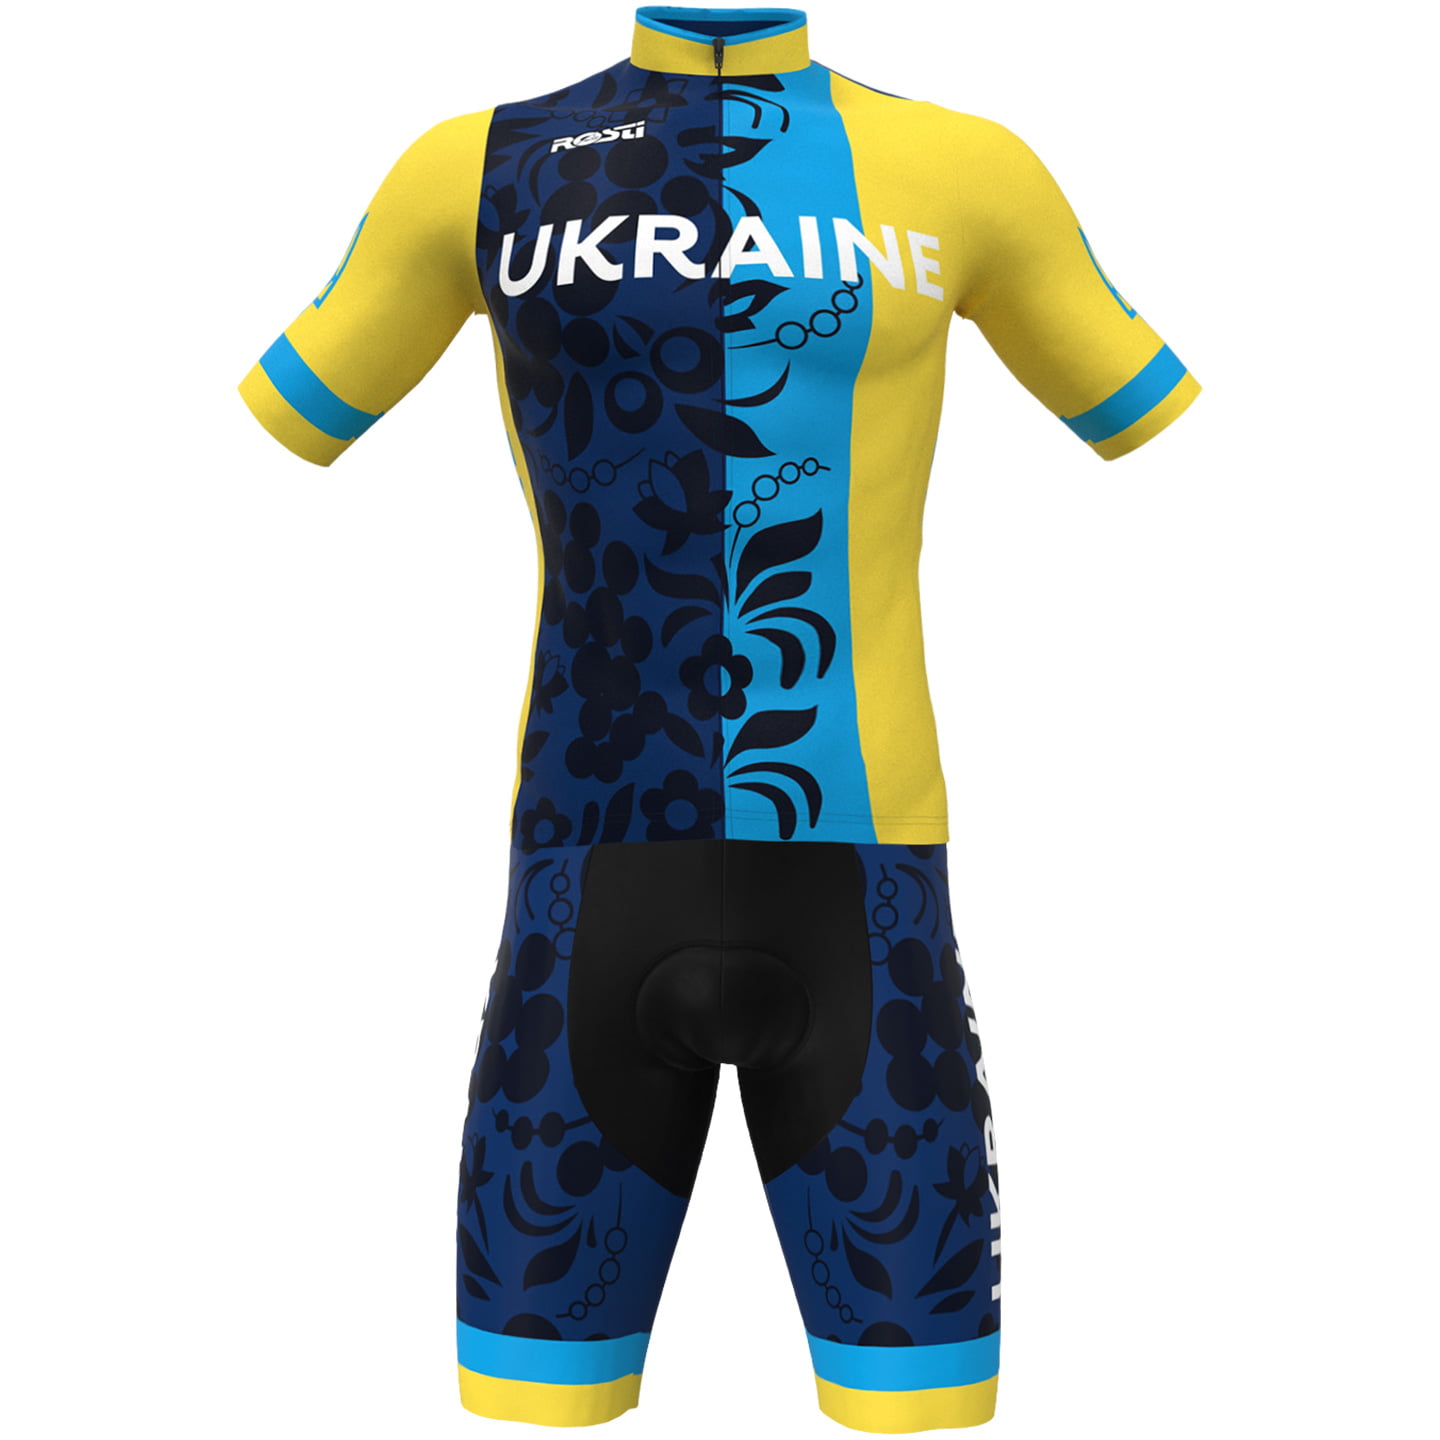 UKRAINISCHE NATIONALMANNSCHAFT 2022 Set (cycling jersey + cycling shorts) Set (2 pieces), for men, Cycling clothing